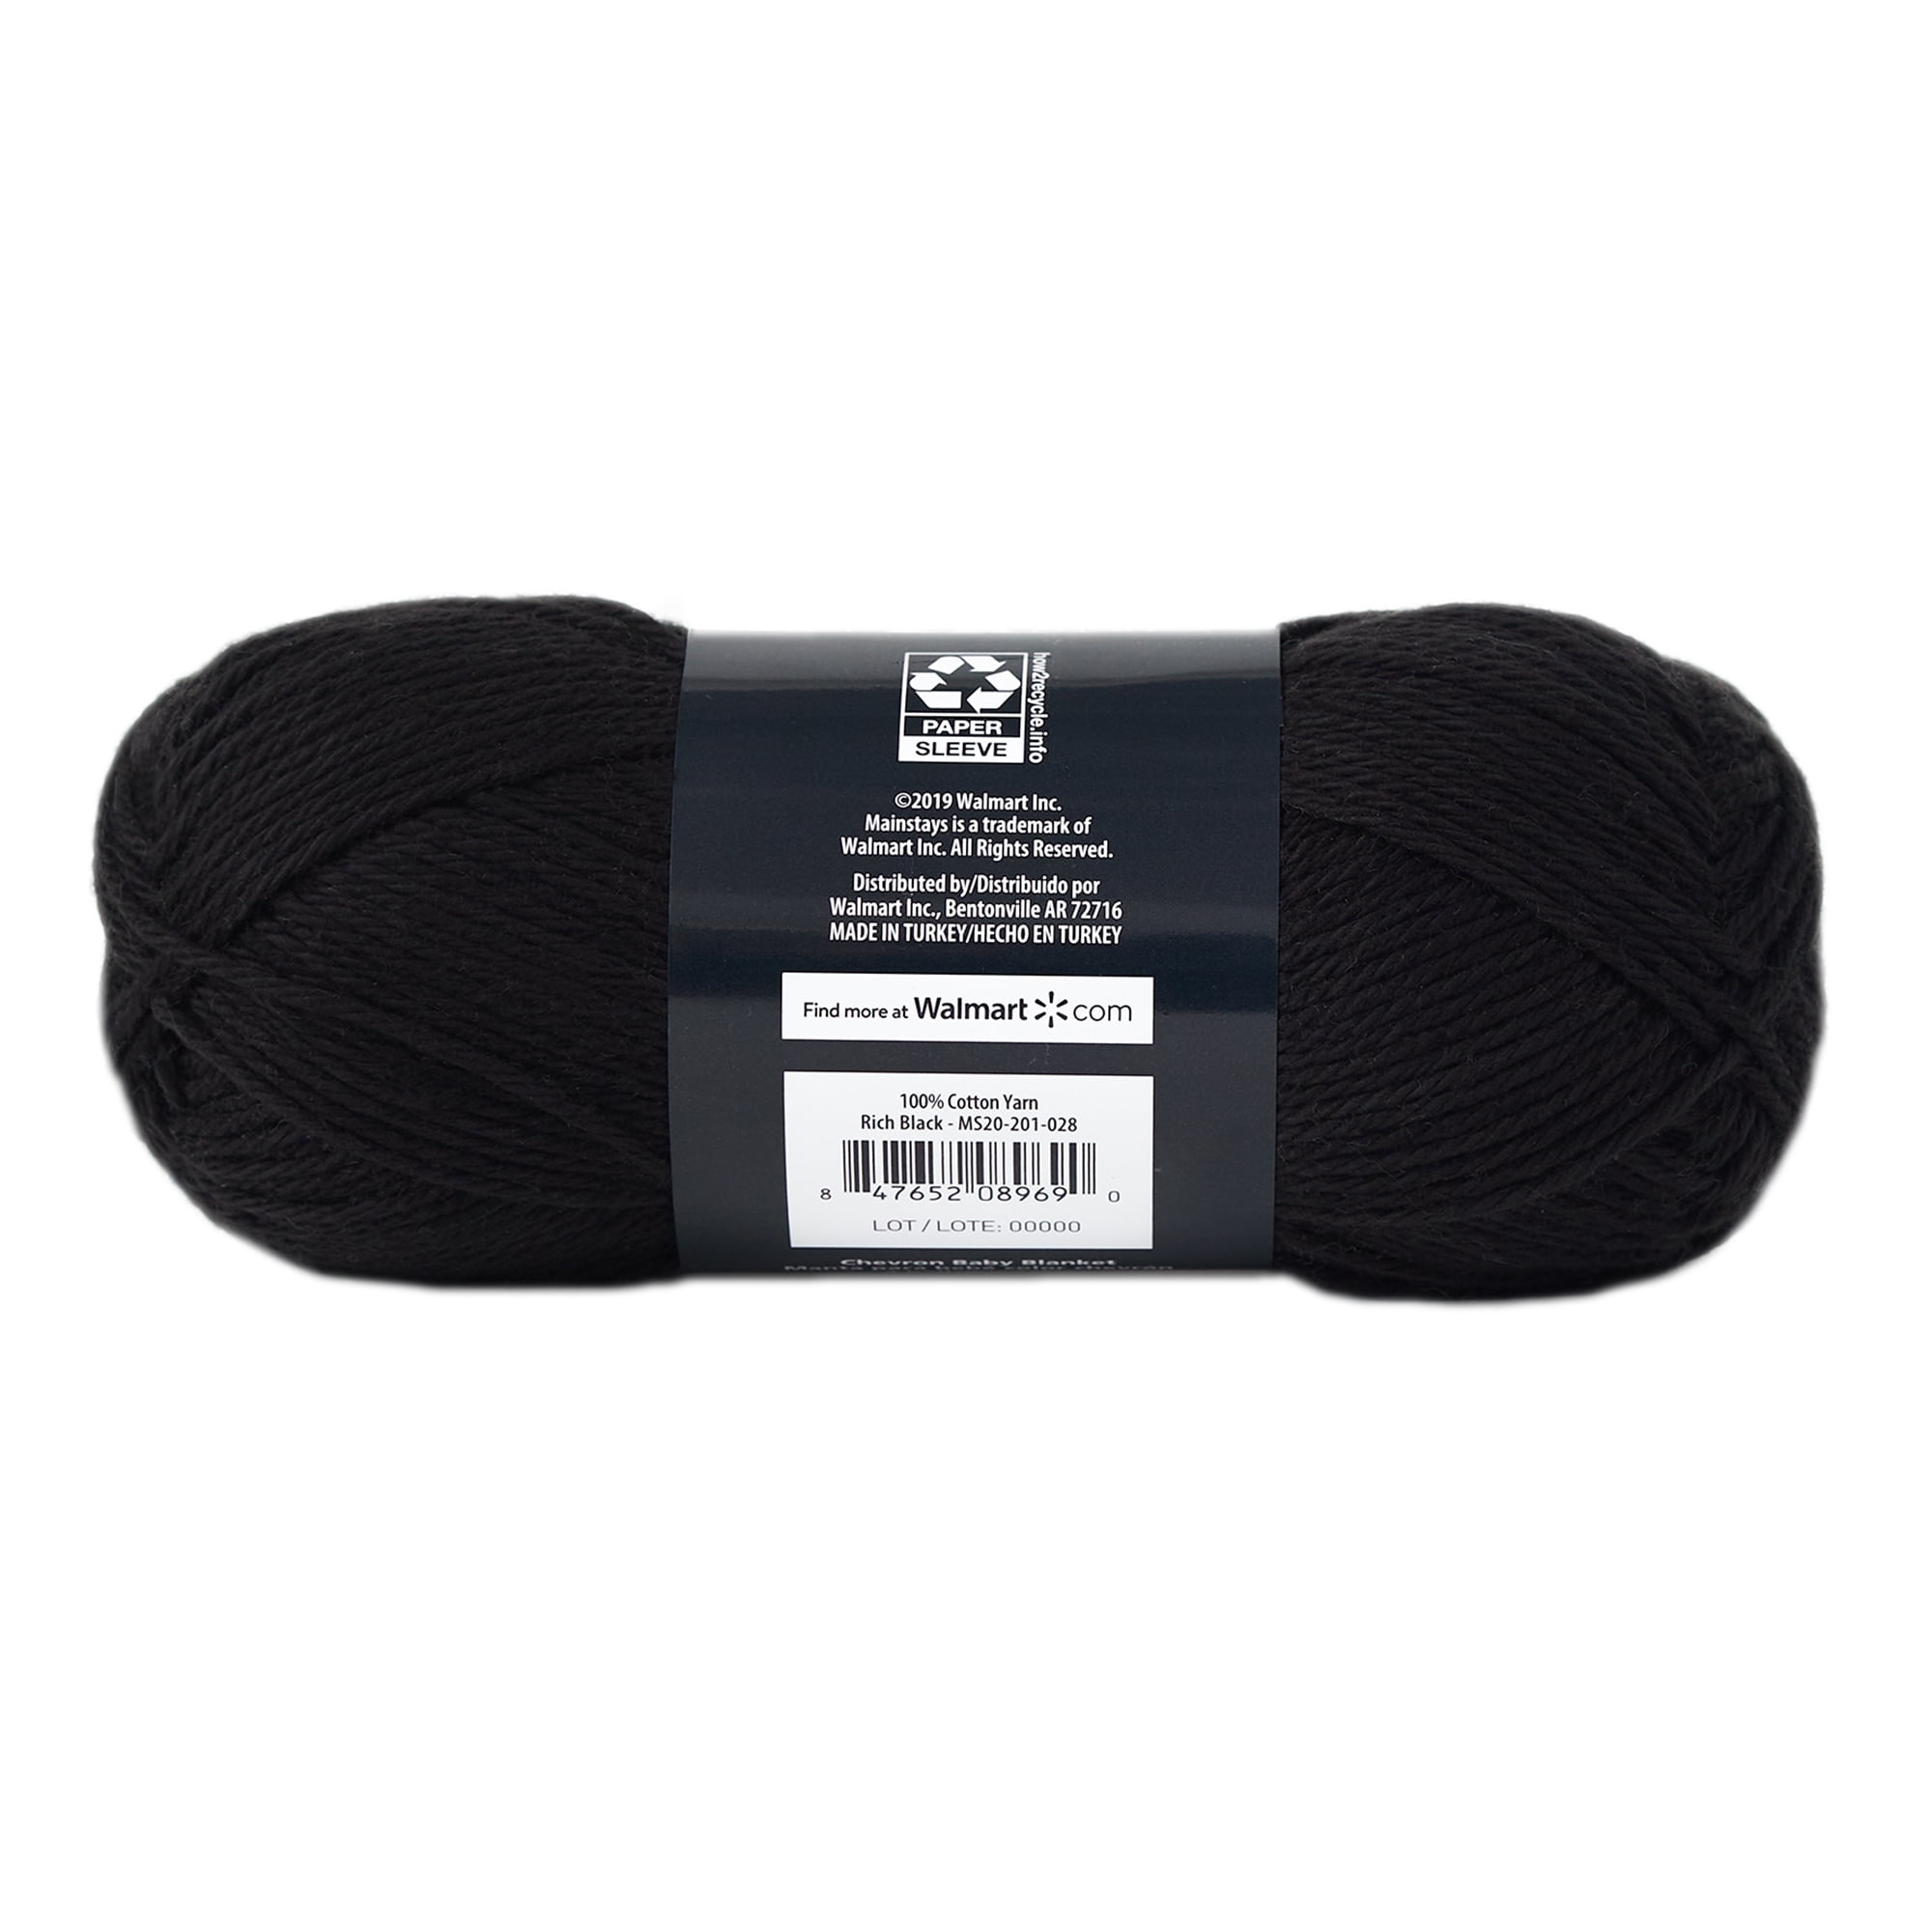 I Love This Cotton Yarn Solid Brown 3.5 oz 180 Yards New – Destashify